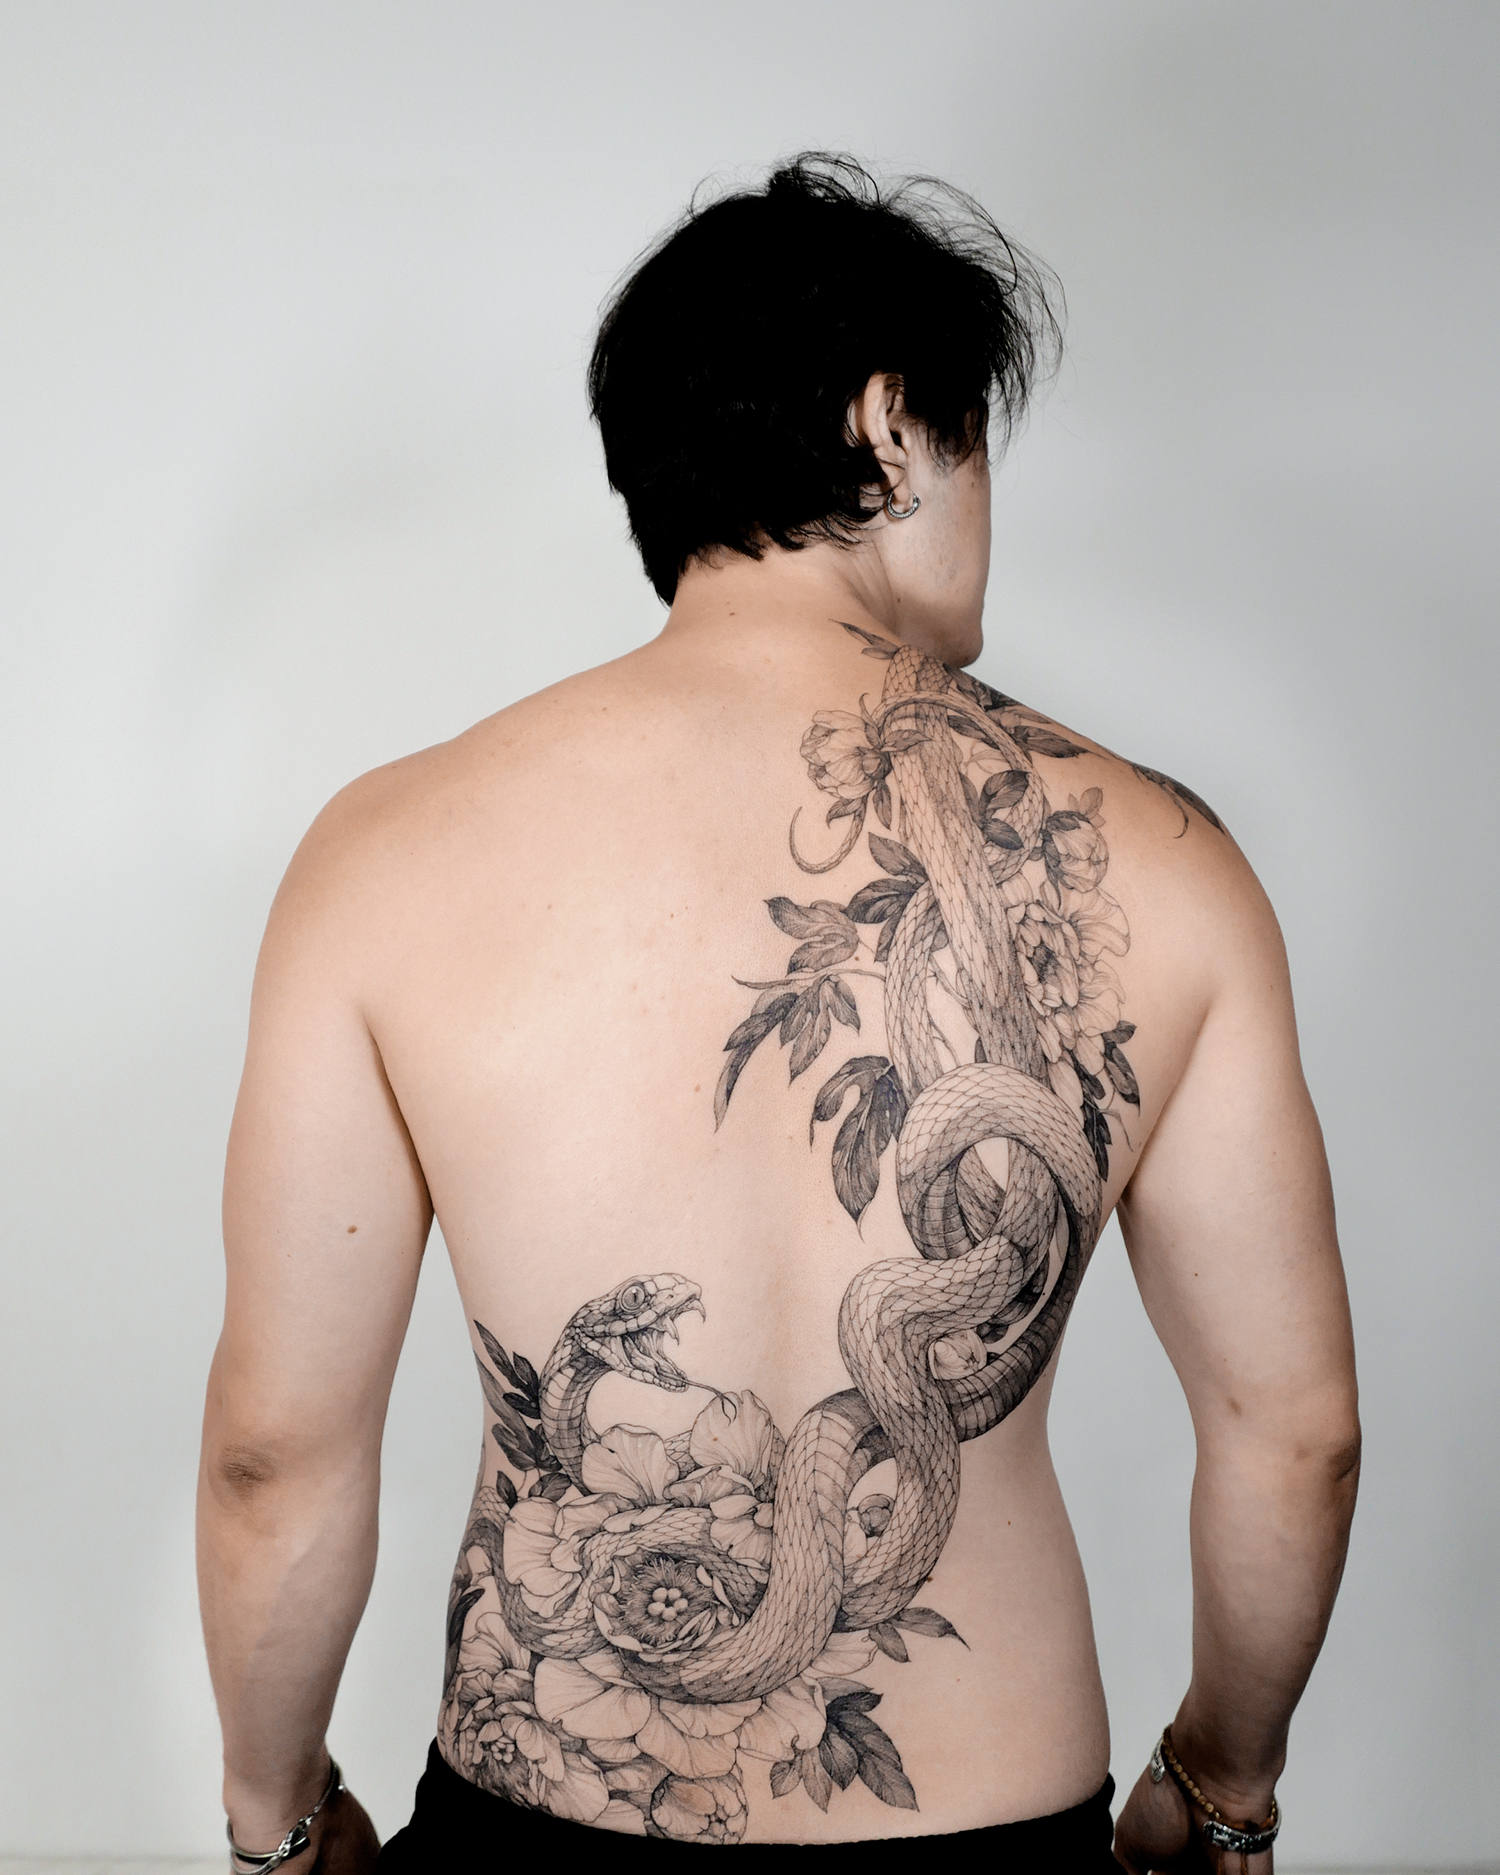 Snake and flower tattoo on back, fine line art